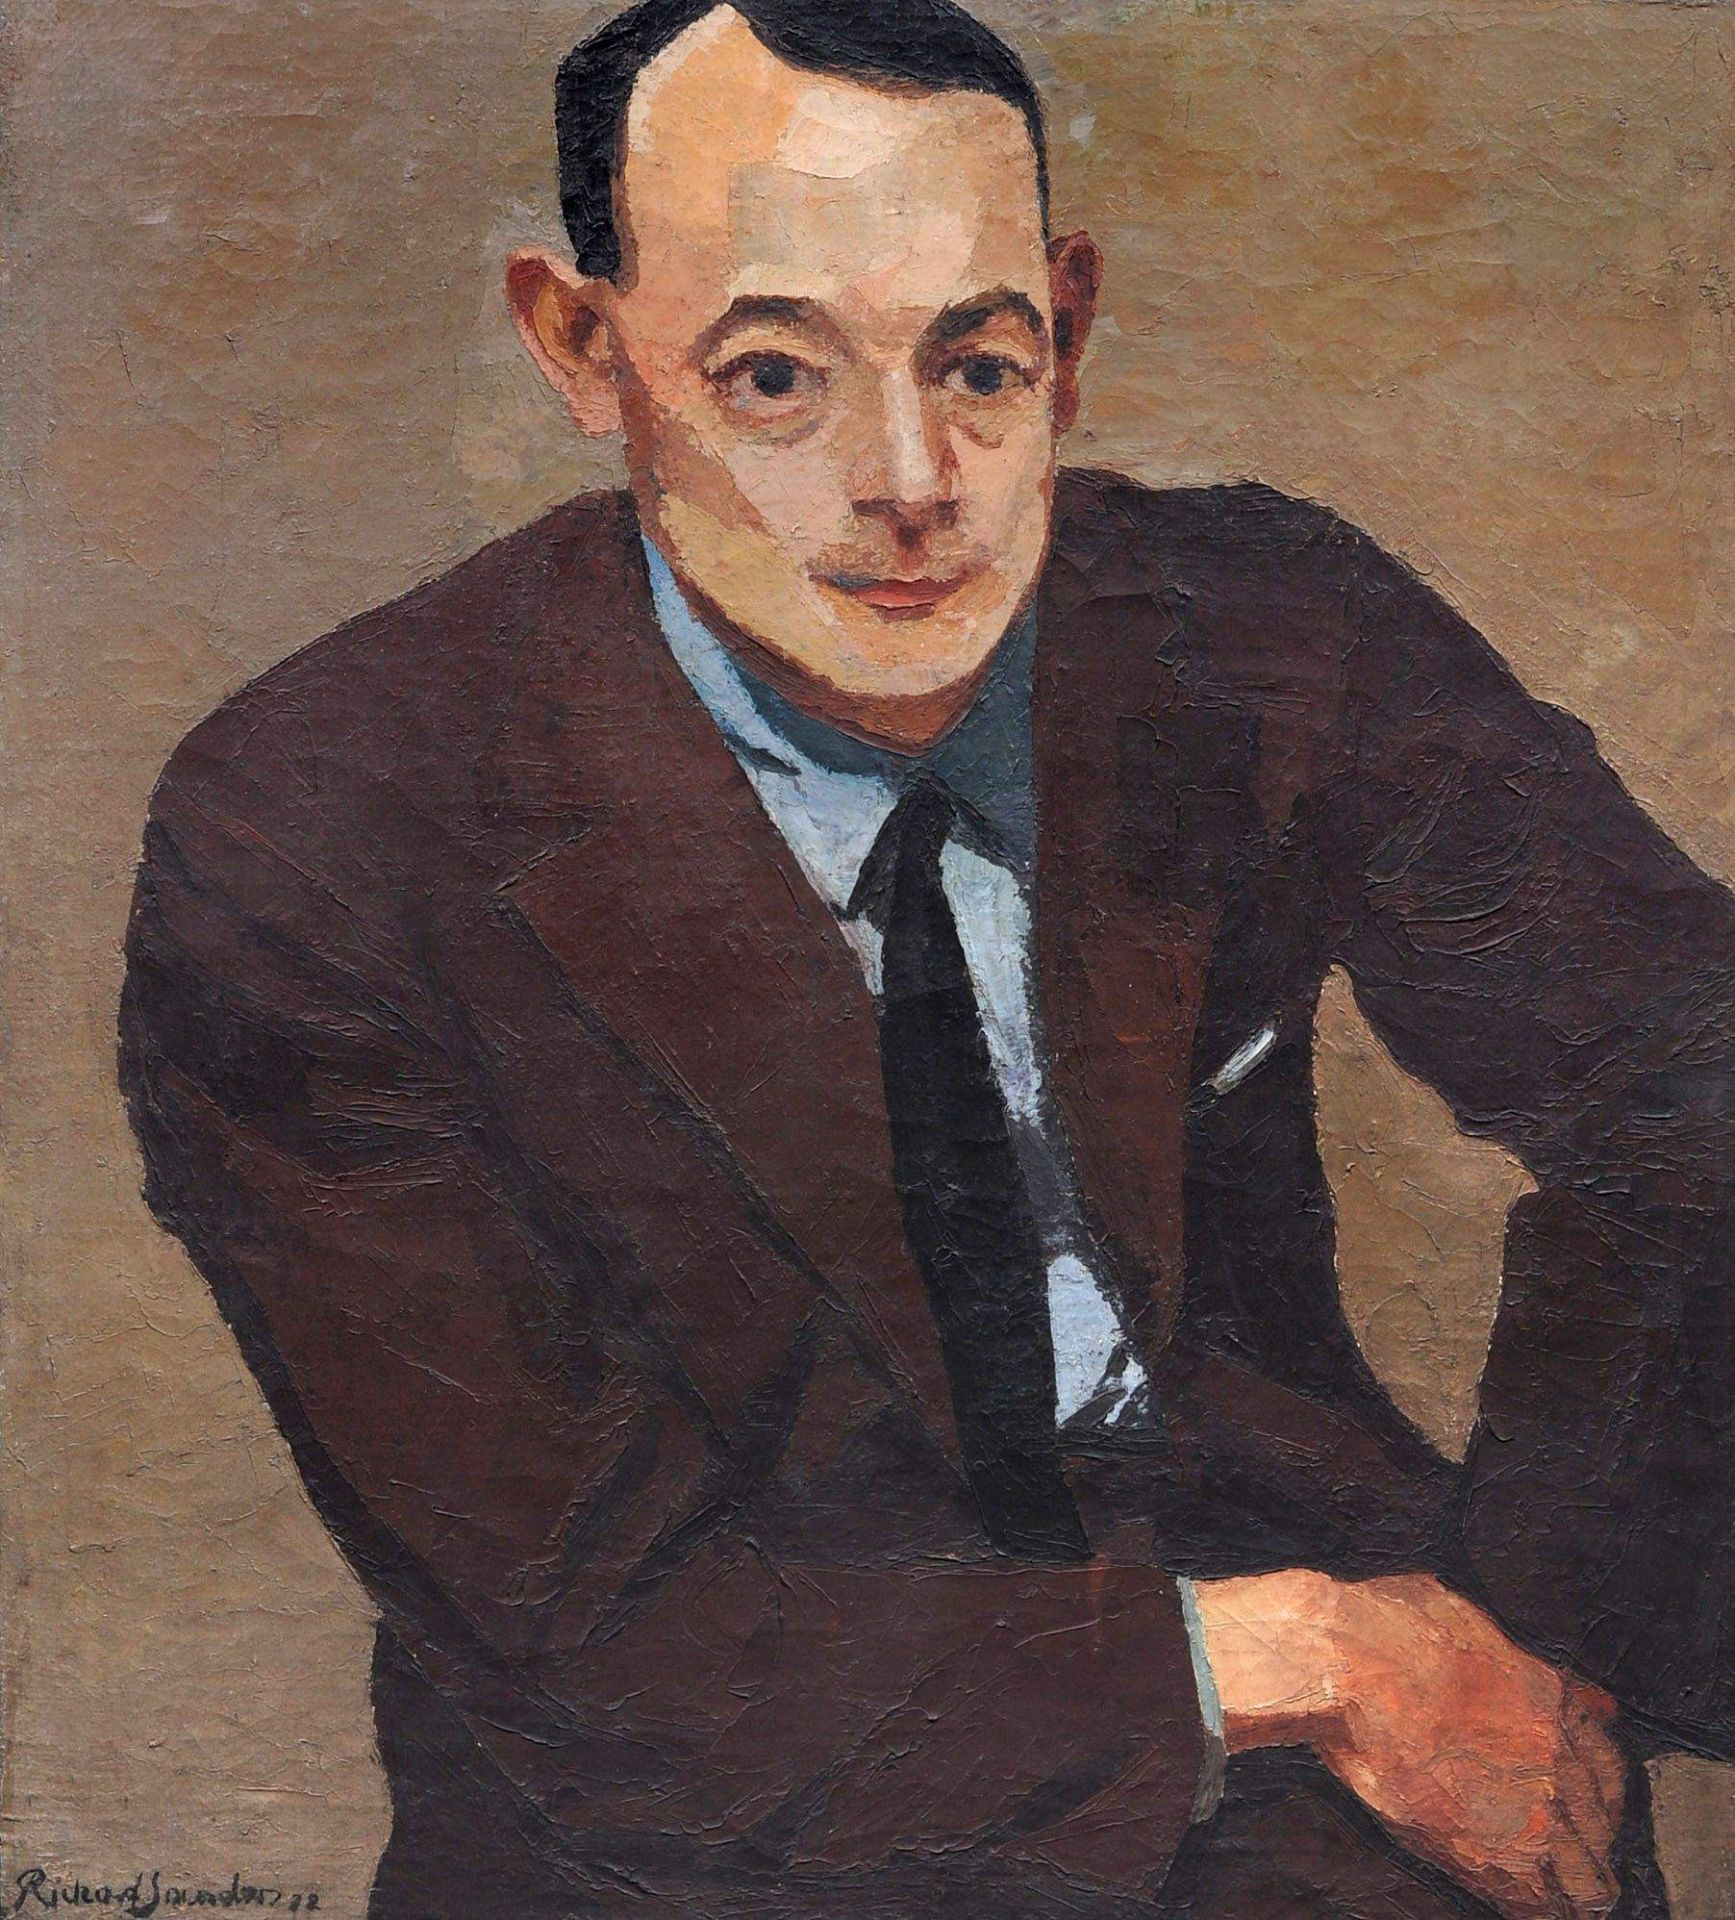 Richard Sander, Herrenporträt. 1932.